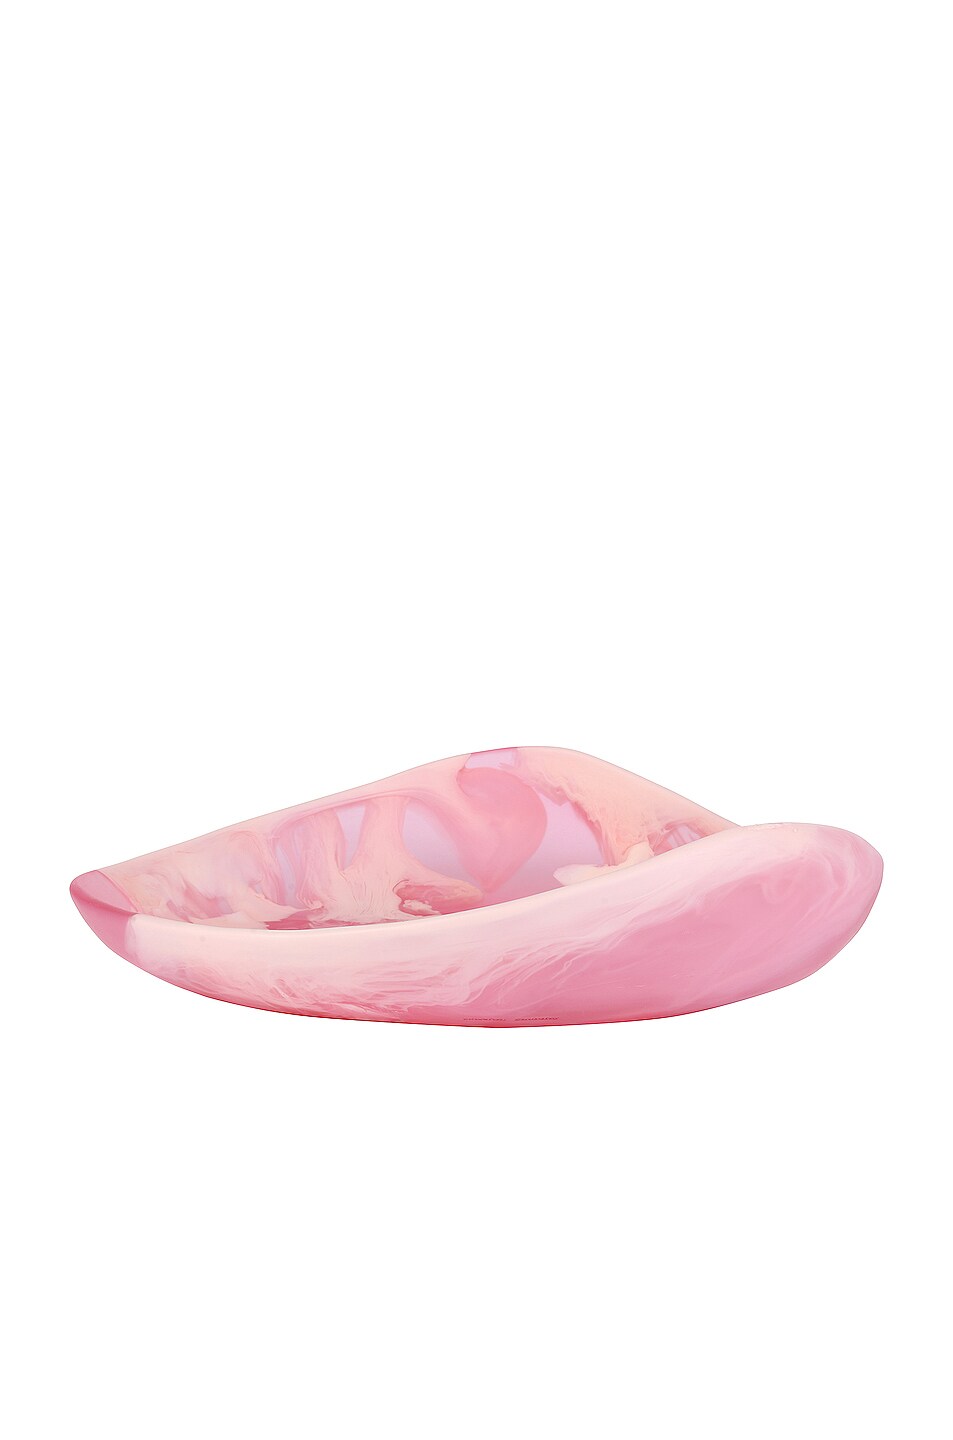 Image 1 of DINOSAUR DESIGNS Large Leaf Bowl in Shell Pink